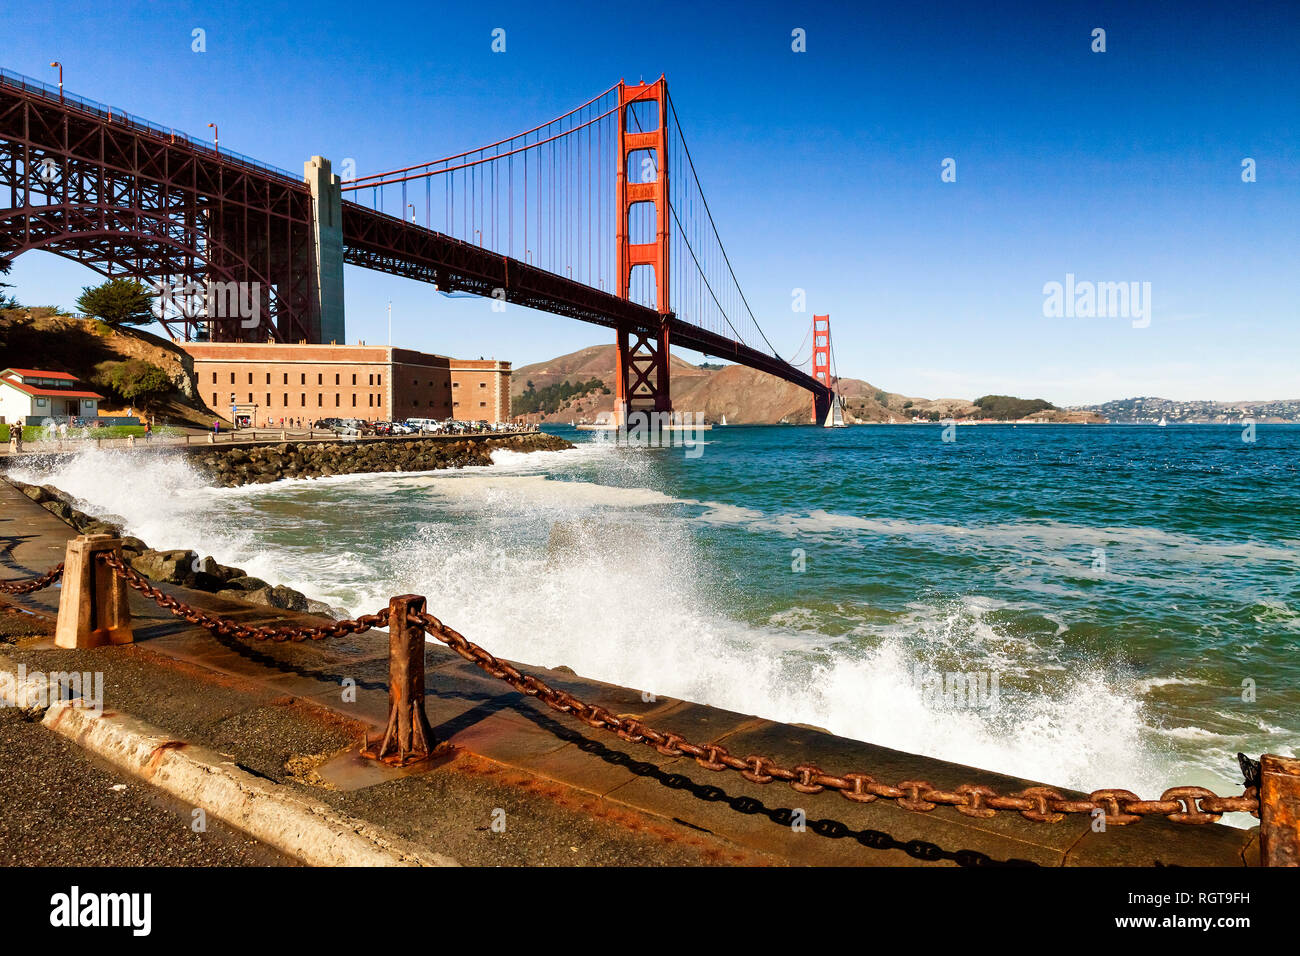 The Golden Gate Bridge in San Francisco bay Stock Photo